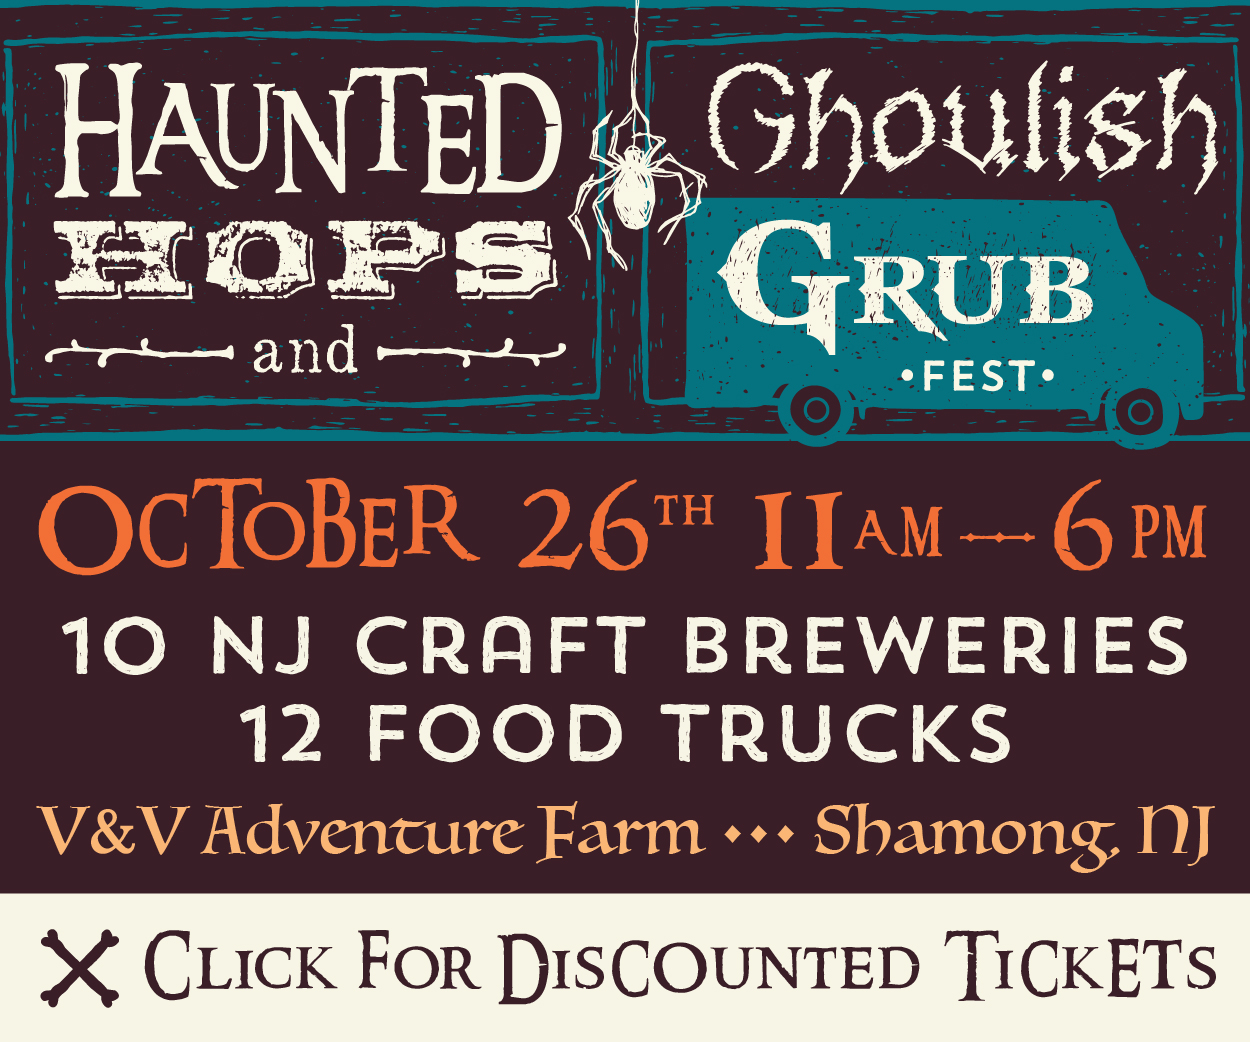 Haunted Hops & Ghoulish Grub Fest banner image